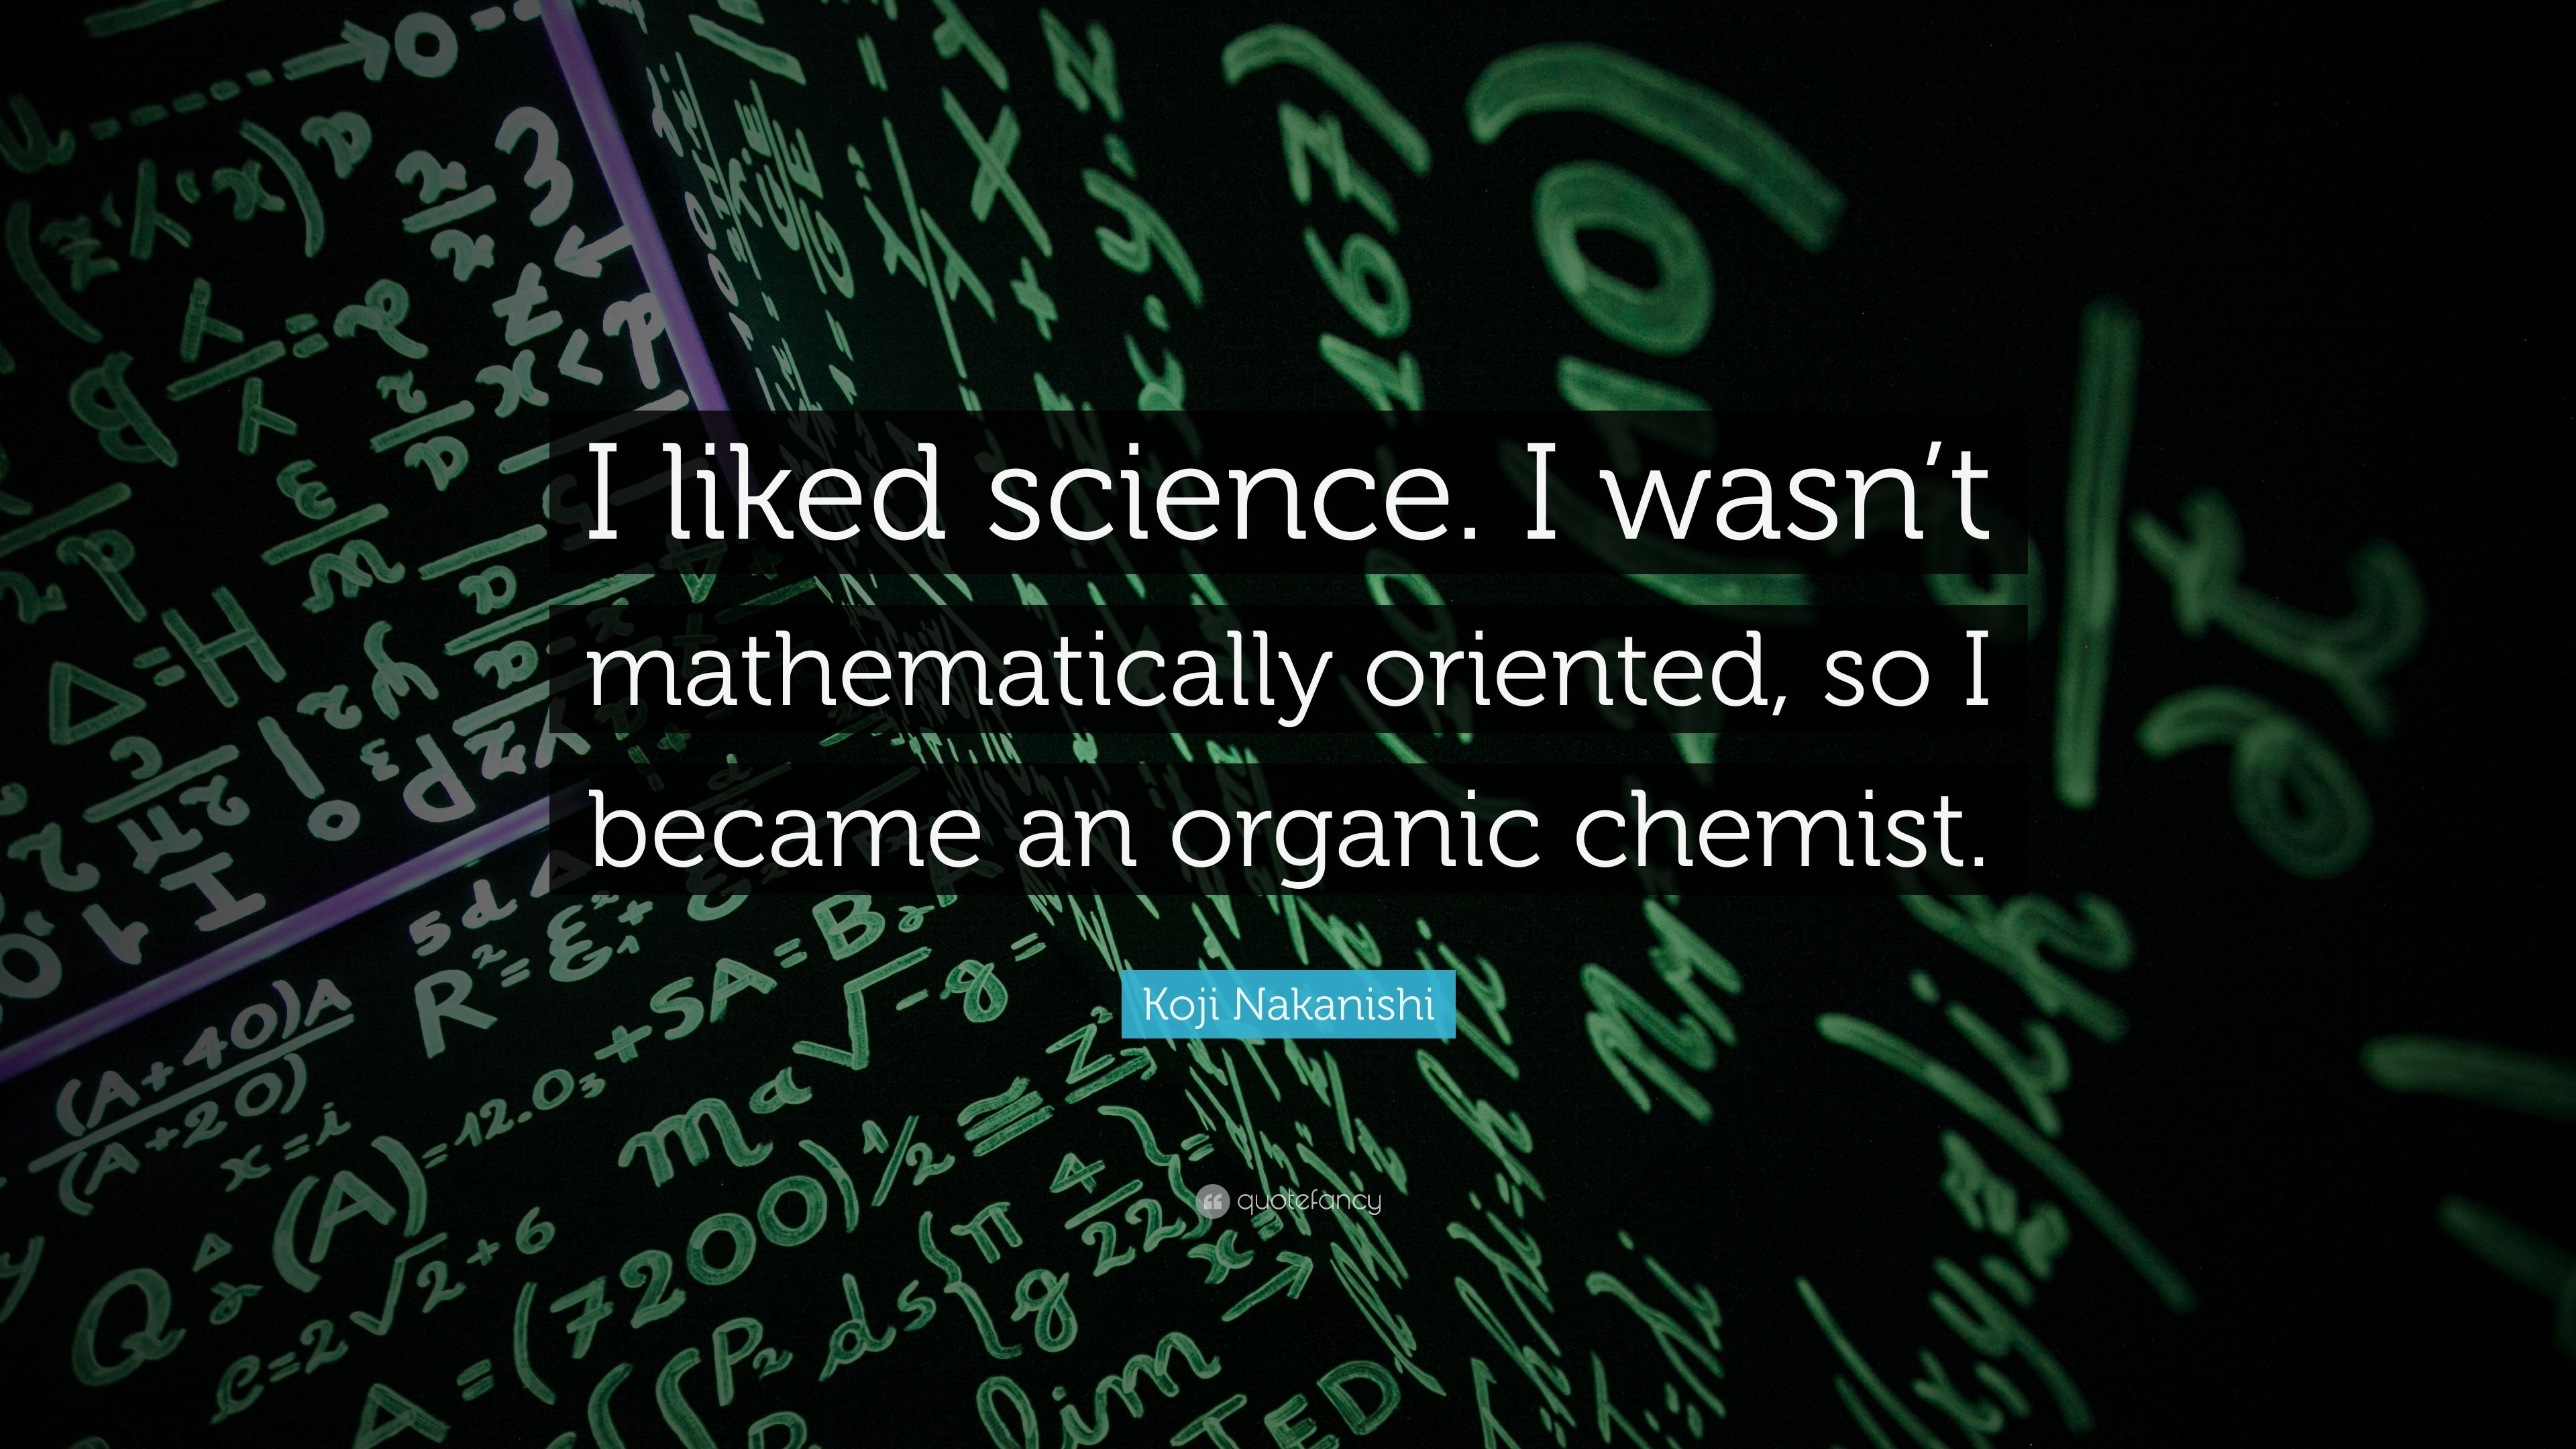 Koji Nakanishi Quote: “I liked science. I wasn't mathematically